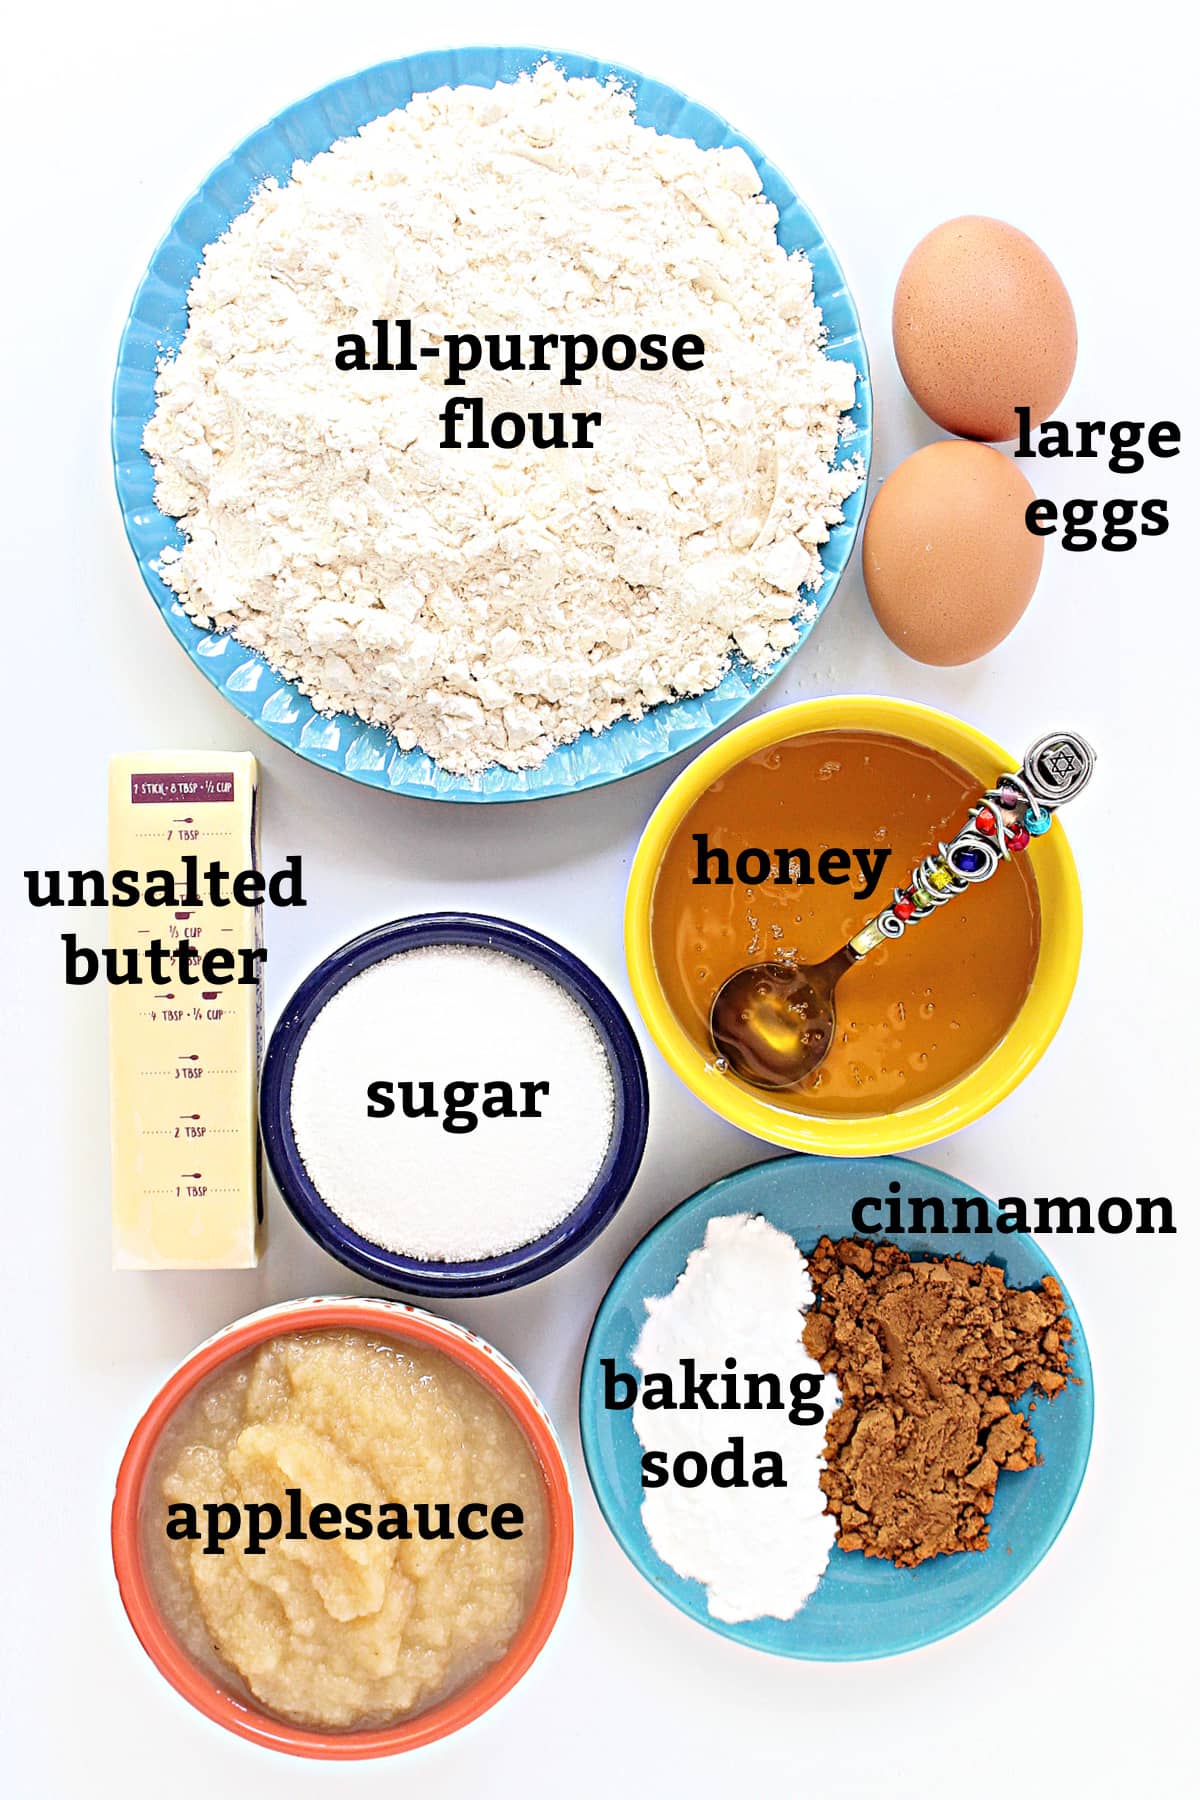 Honey Cake ingredients with labels; flour, eggs, unsalted butter, honey, sugar, applesauce, baking soda, cinnamon.